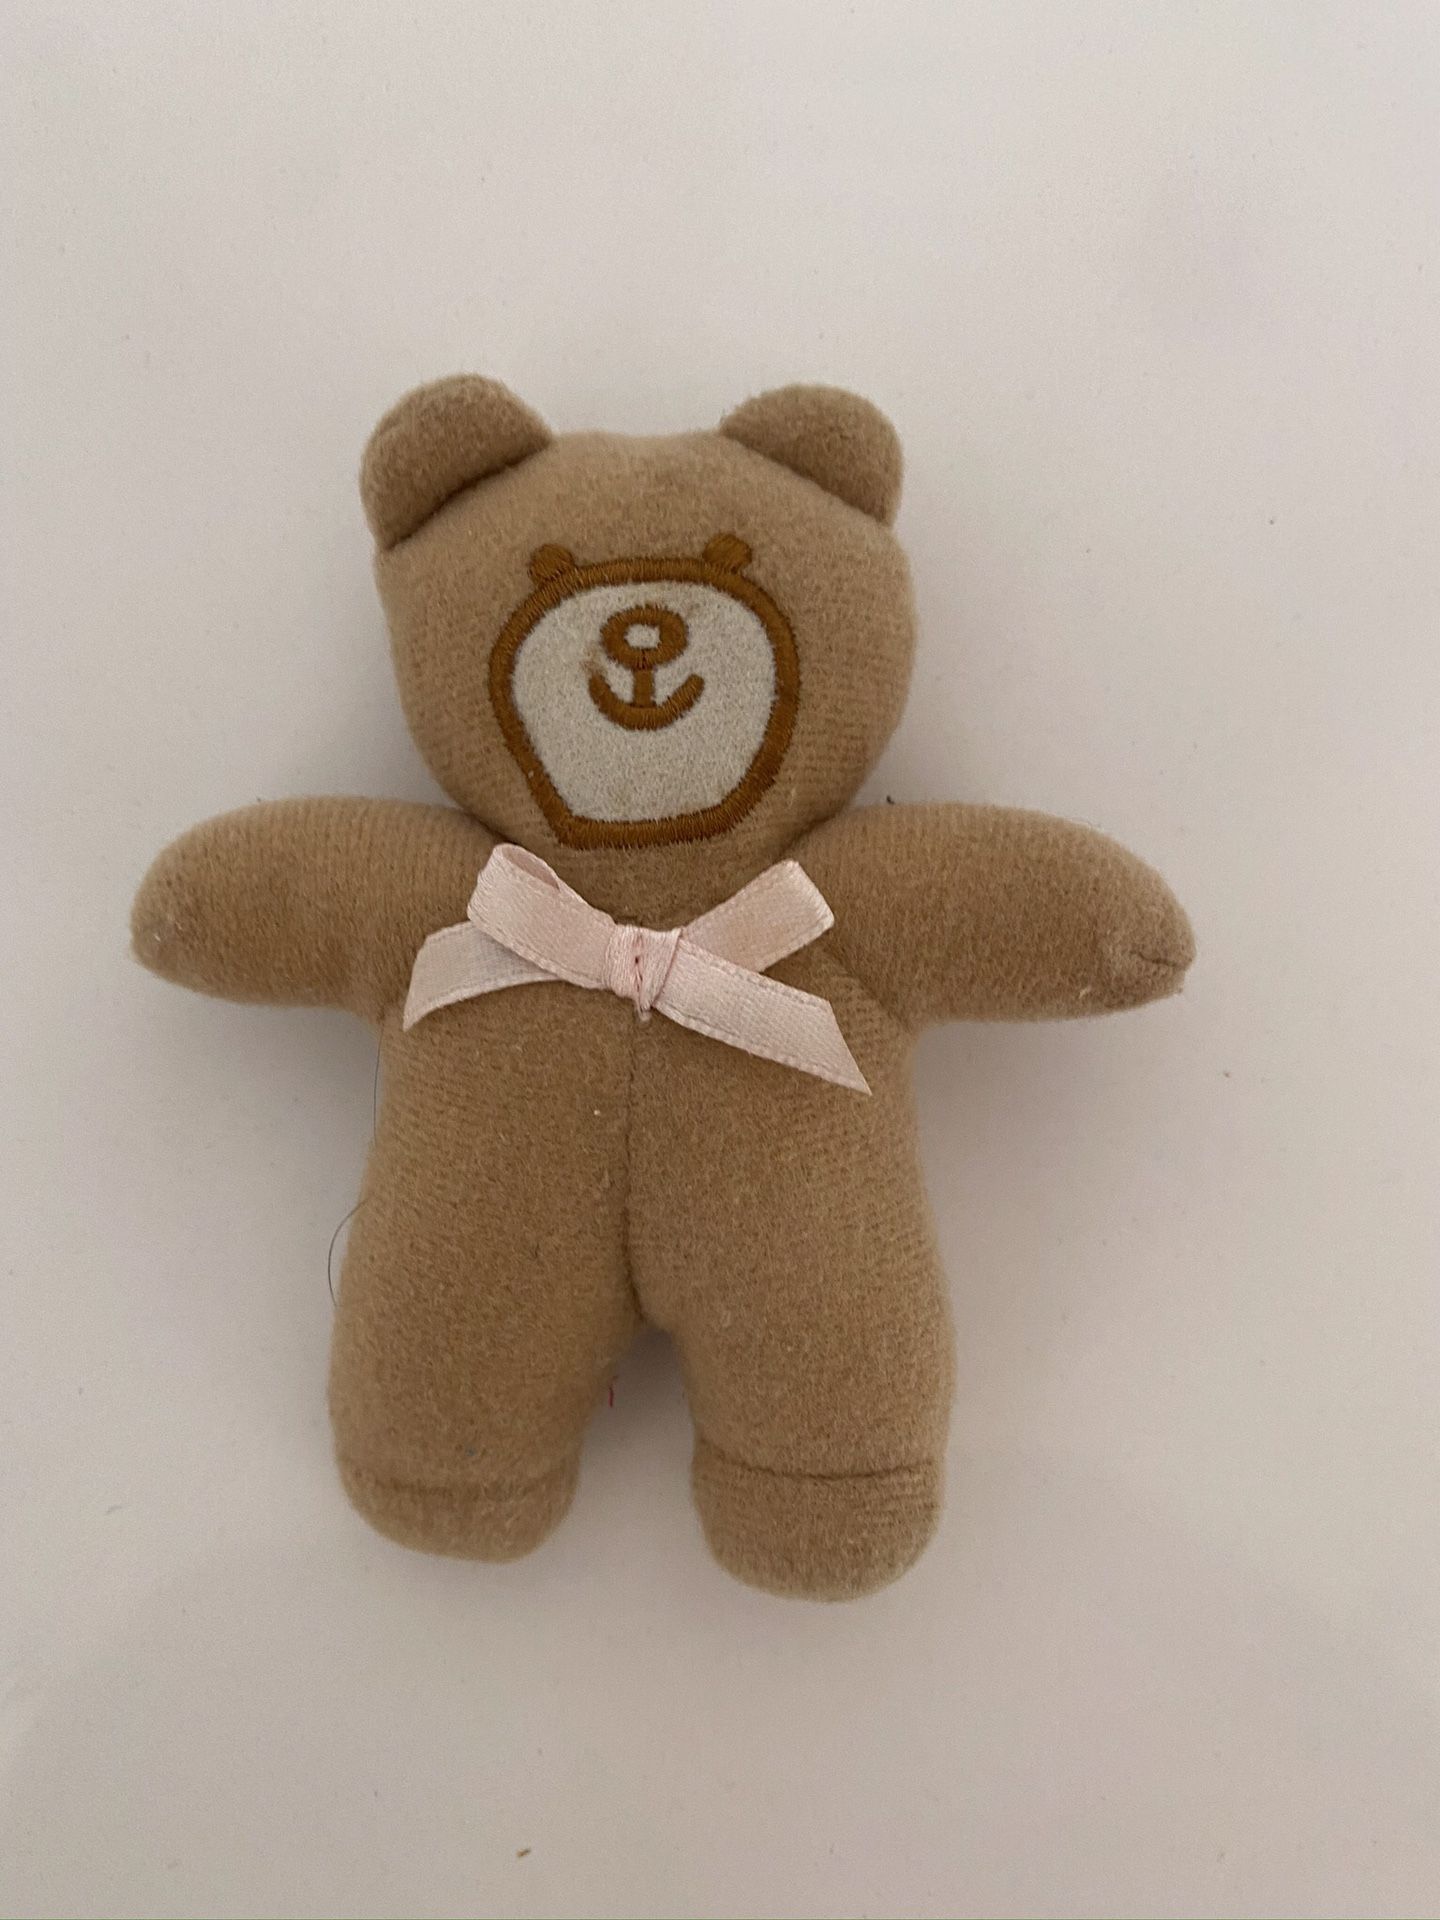 Teddy bear for American Girl Doll